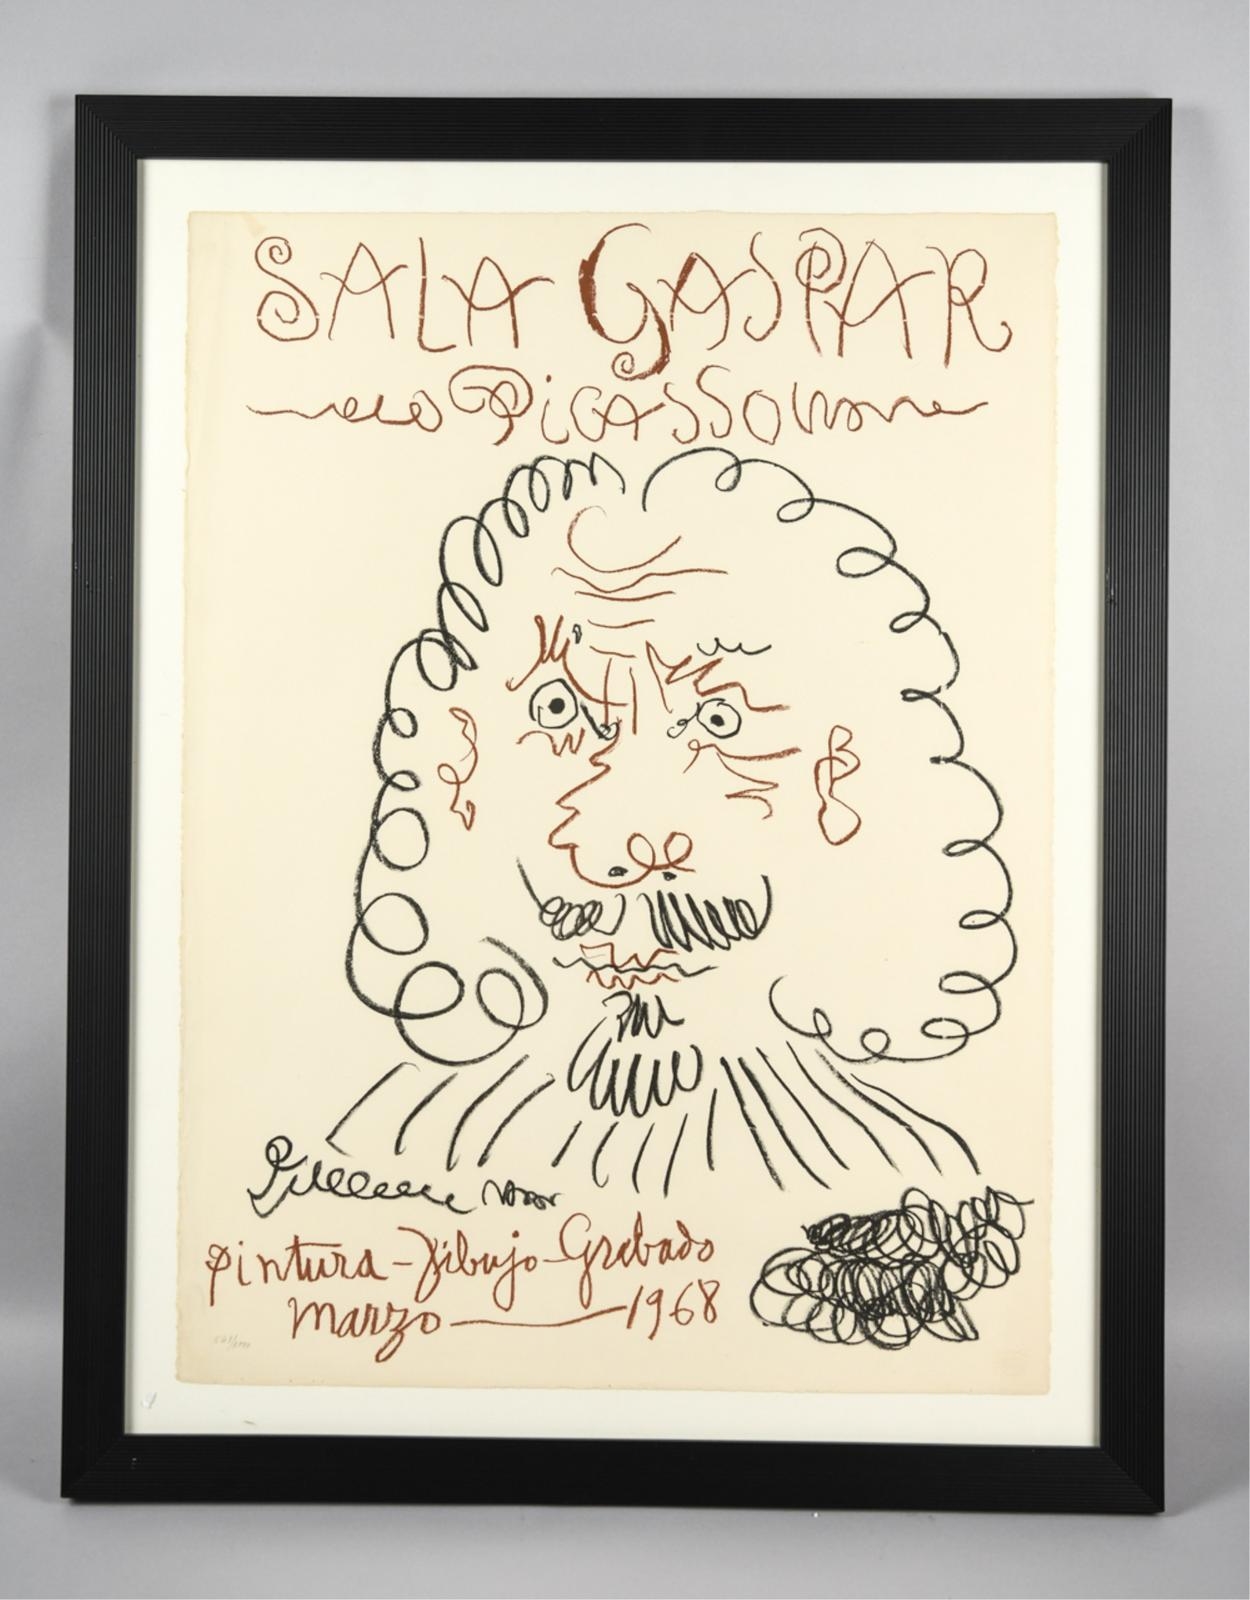 SALA GASPAR LTD. ED. POSTER by Pablo Picasso, 1968